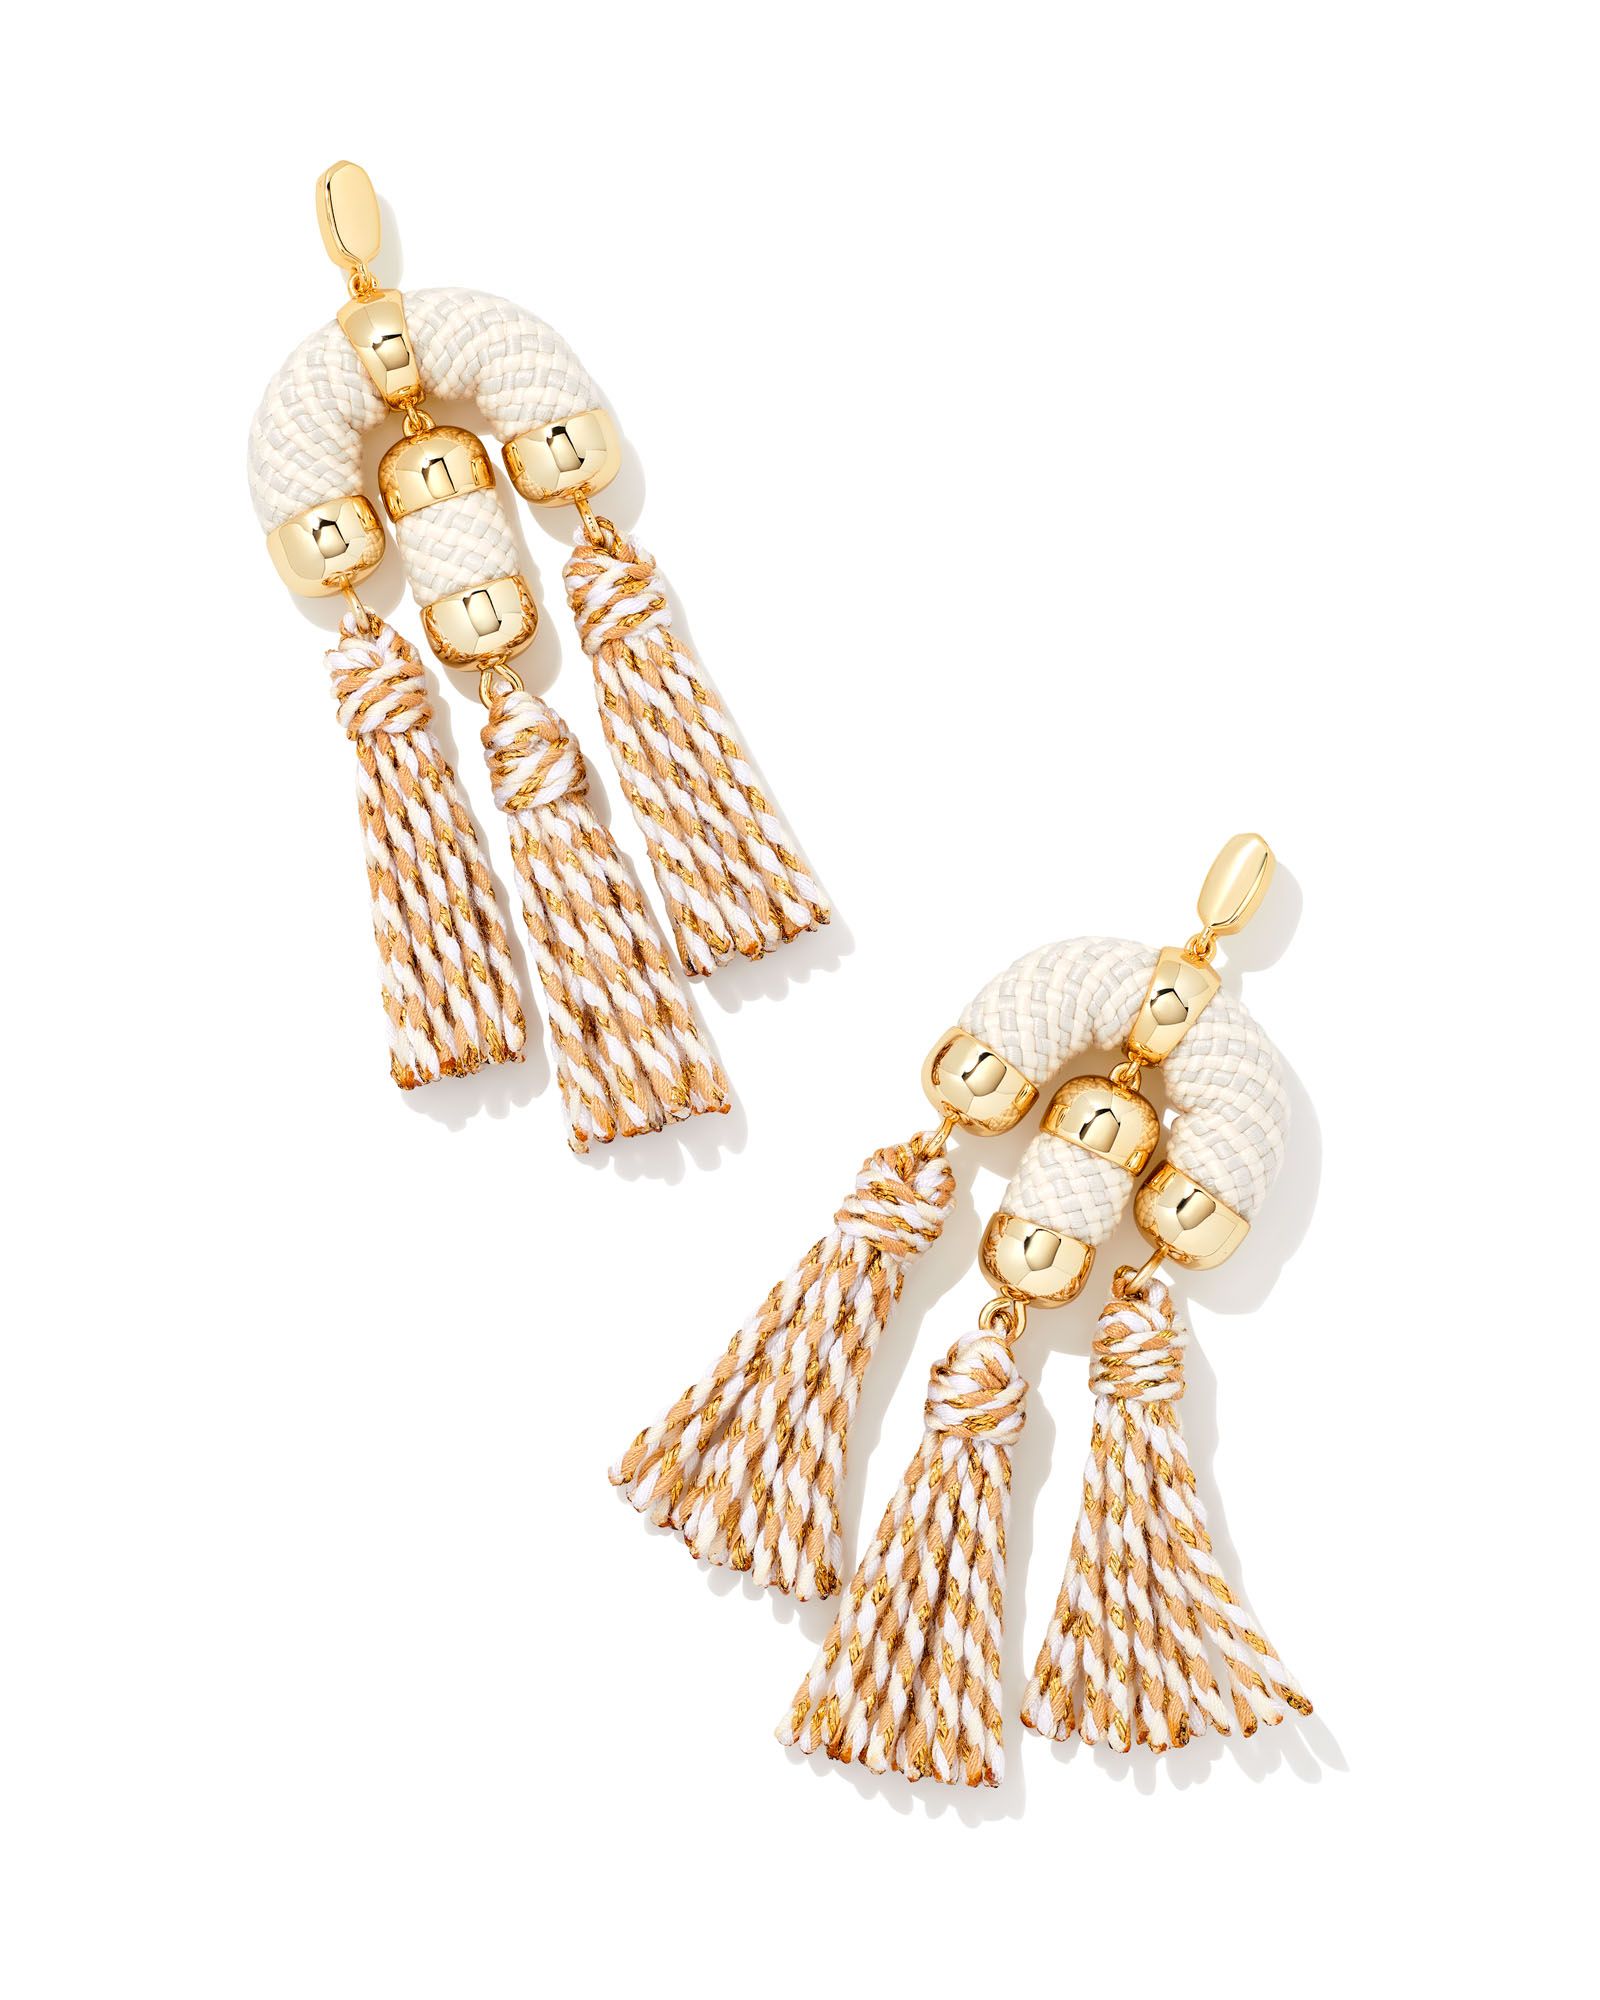 Masie Gold Statement Tassel Earrings in Pastel Mix | Kendra Scott | Kendra Scott